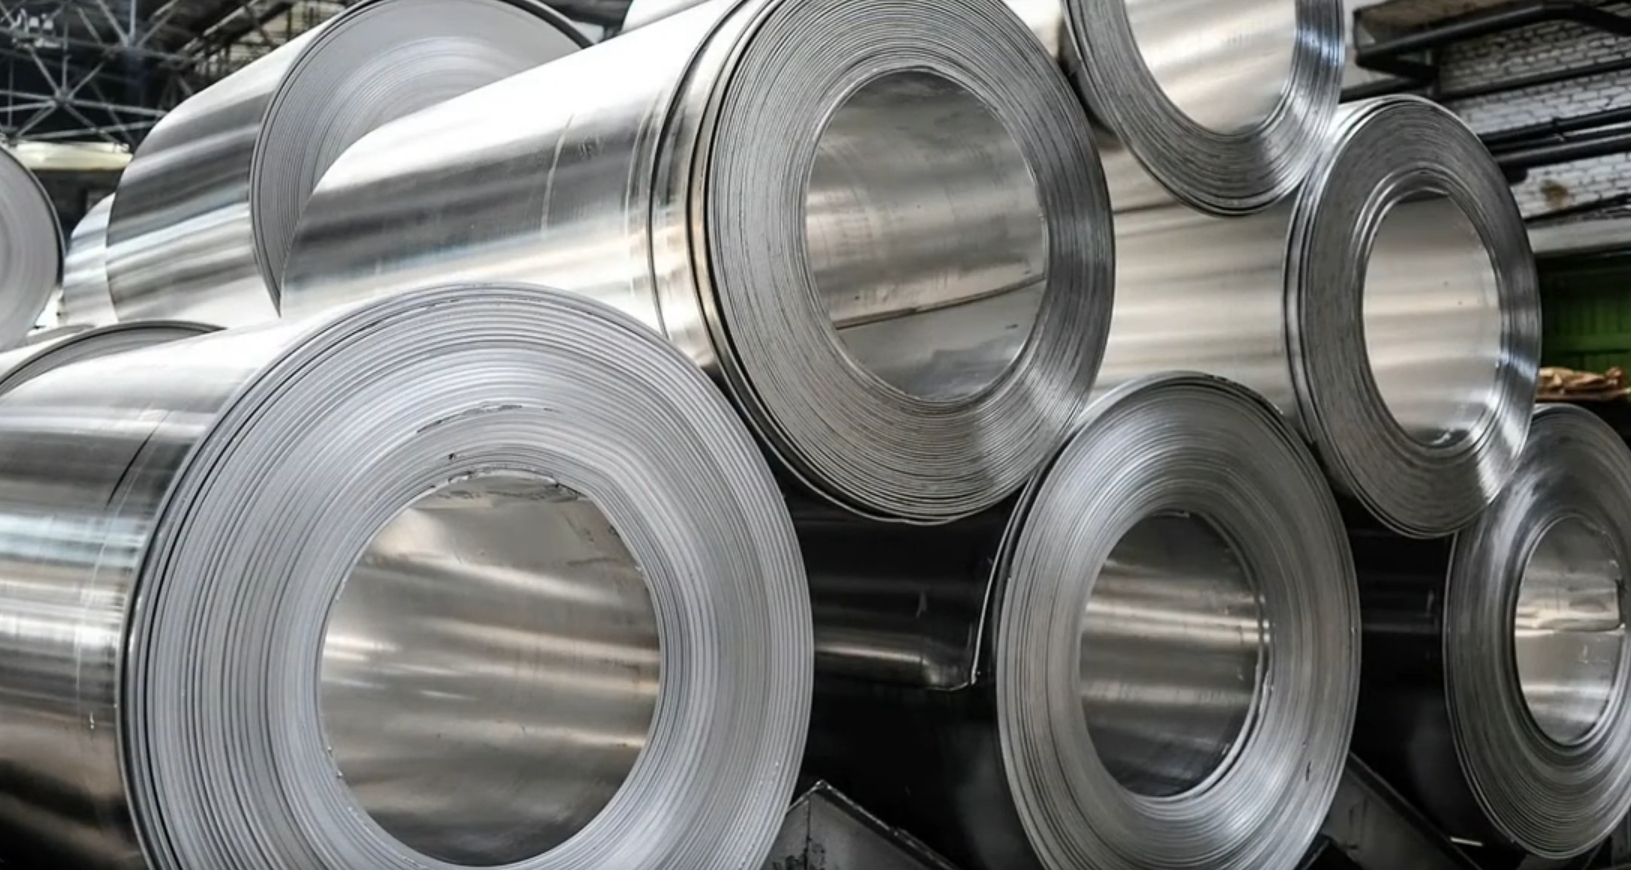 KADI Memulai Penyelidikan Anti Dumping Atas Barang Impor Cold Rolled Stainless Steel (CRS)